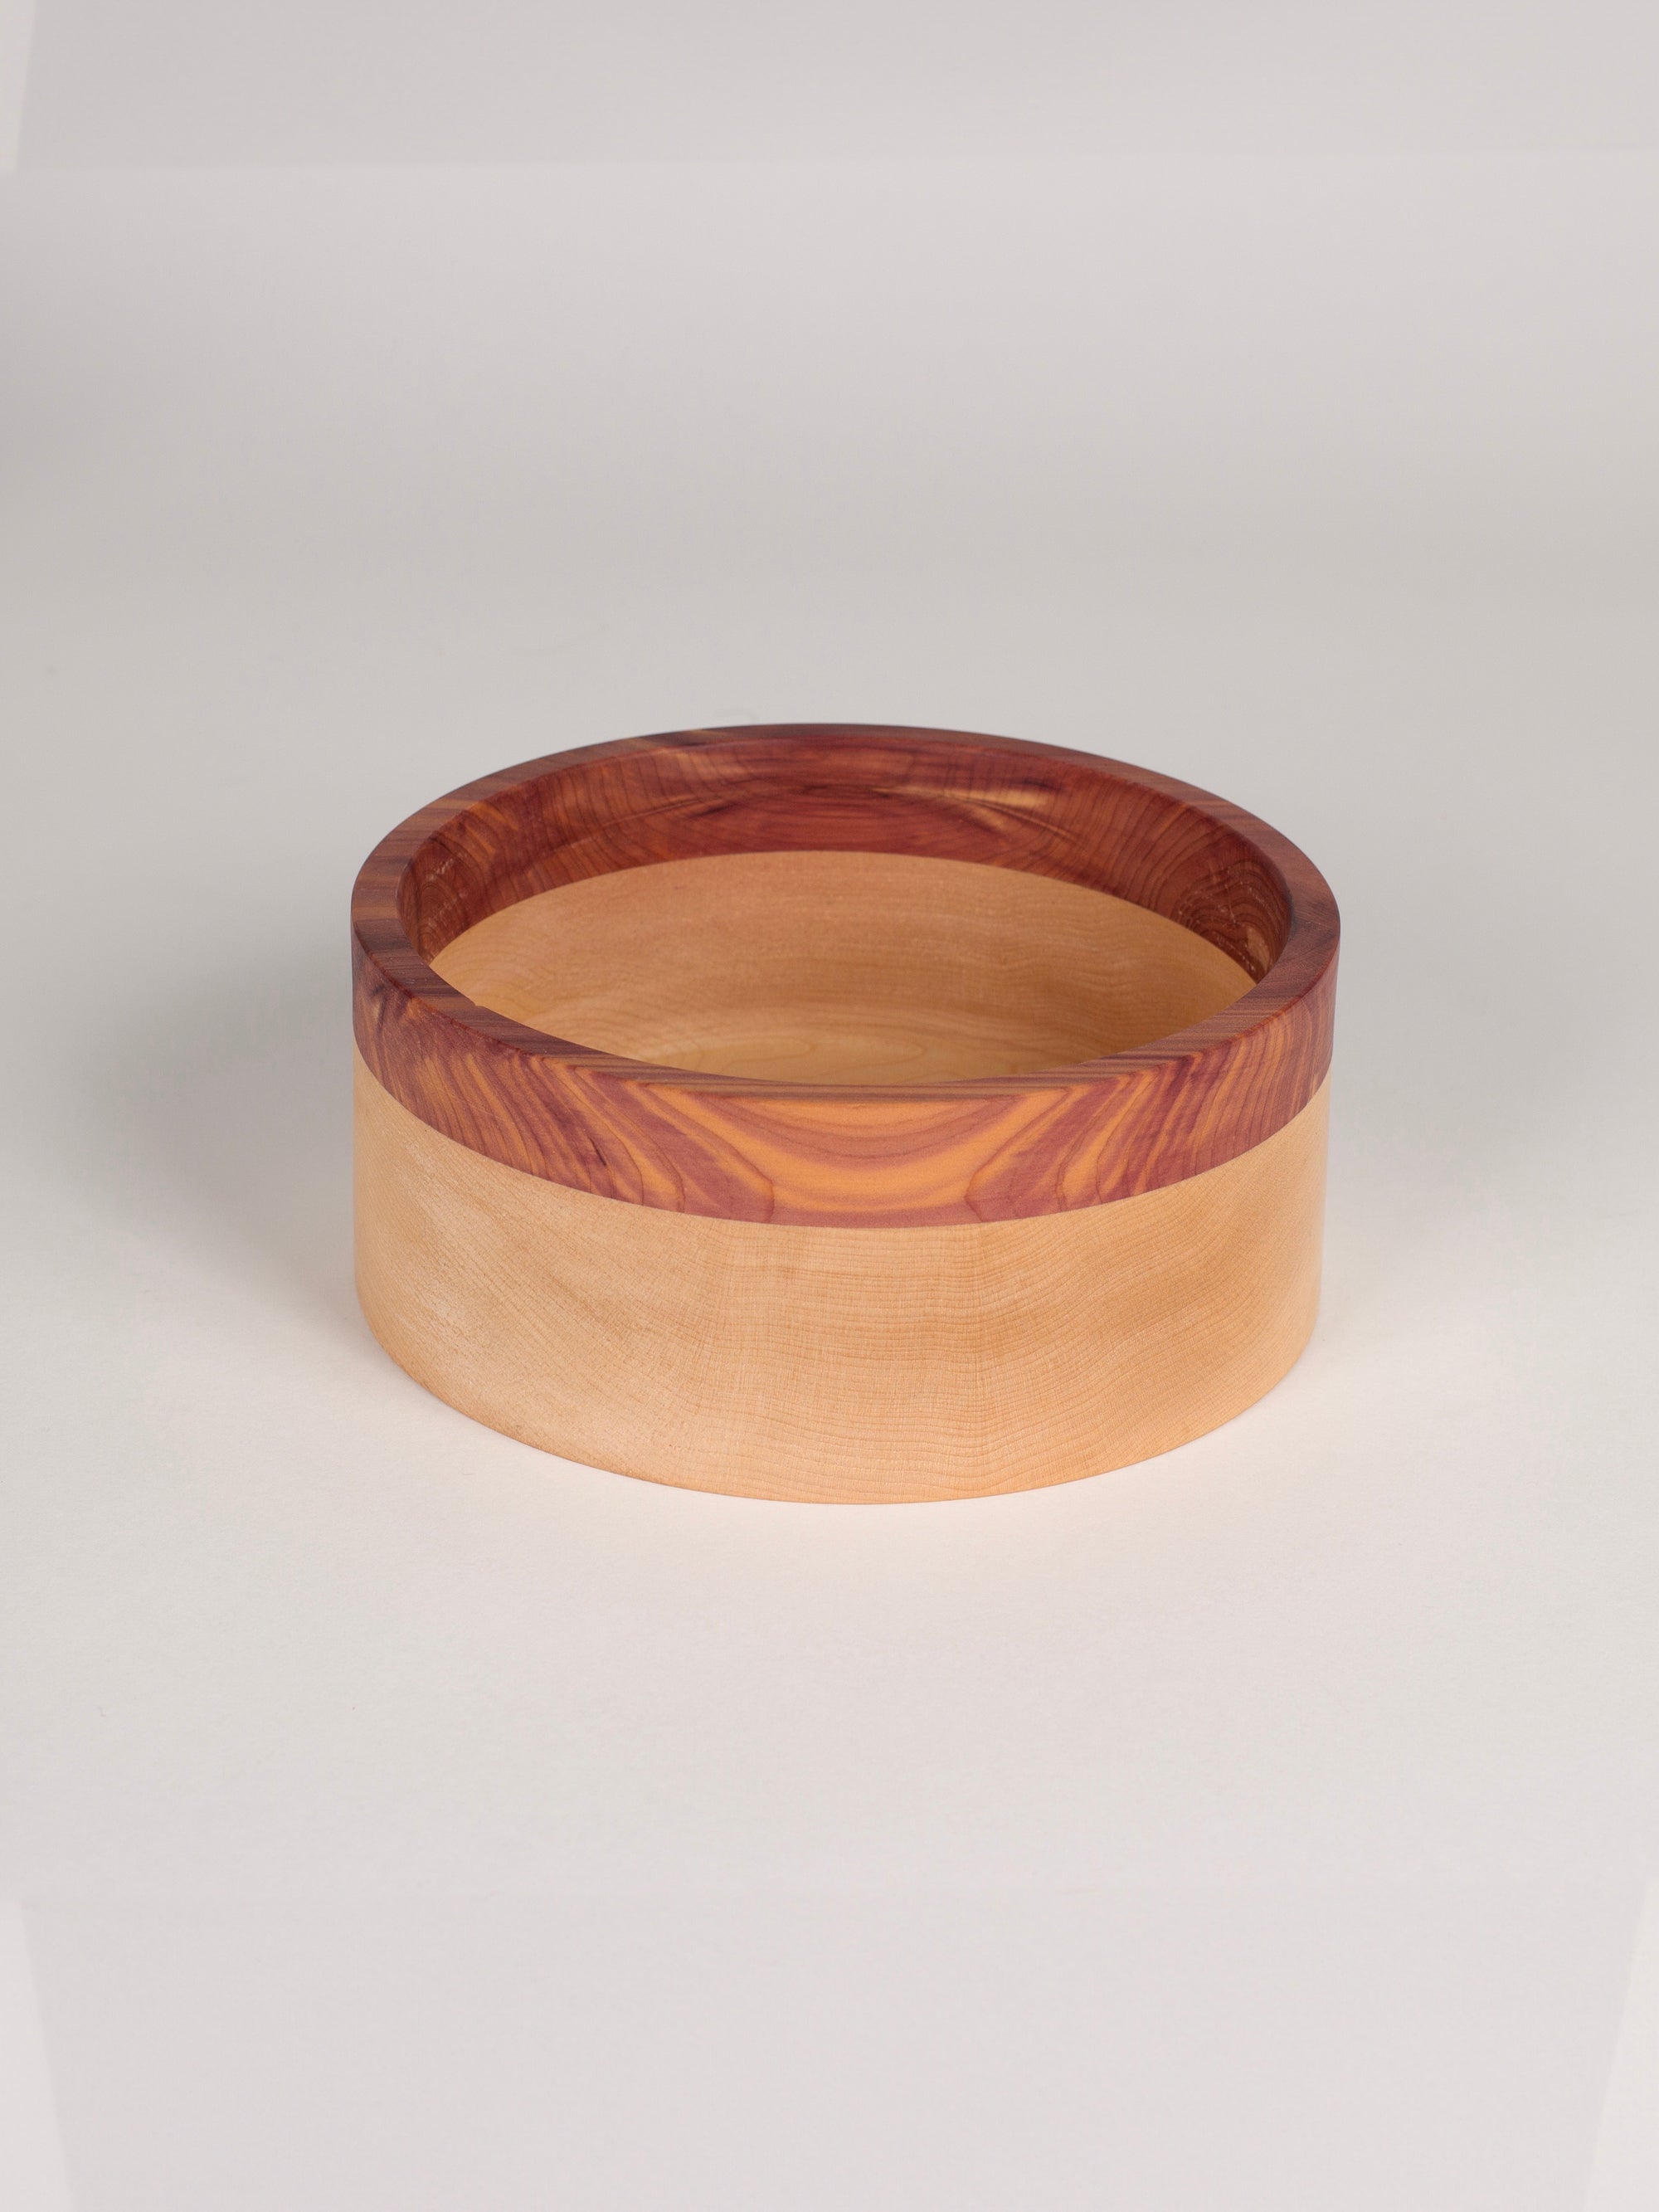 Aromatic Cedar Bowl